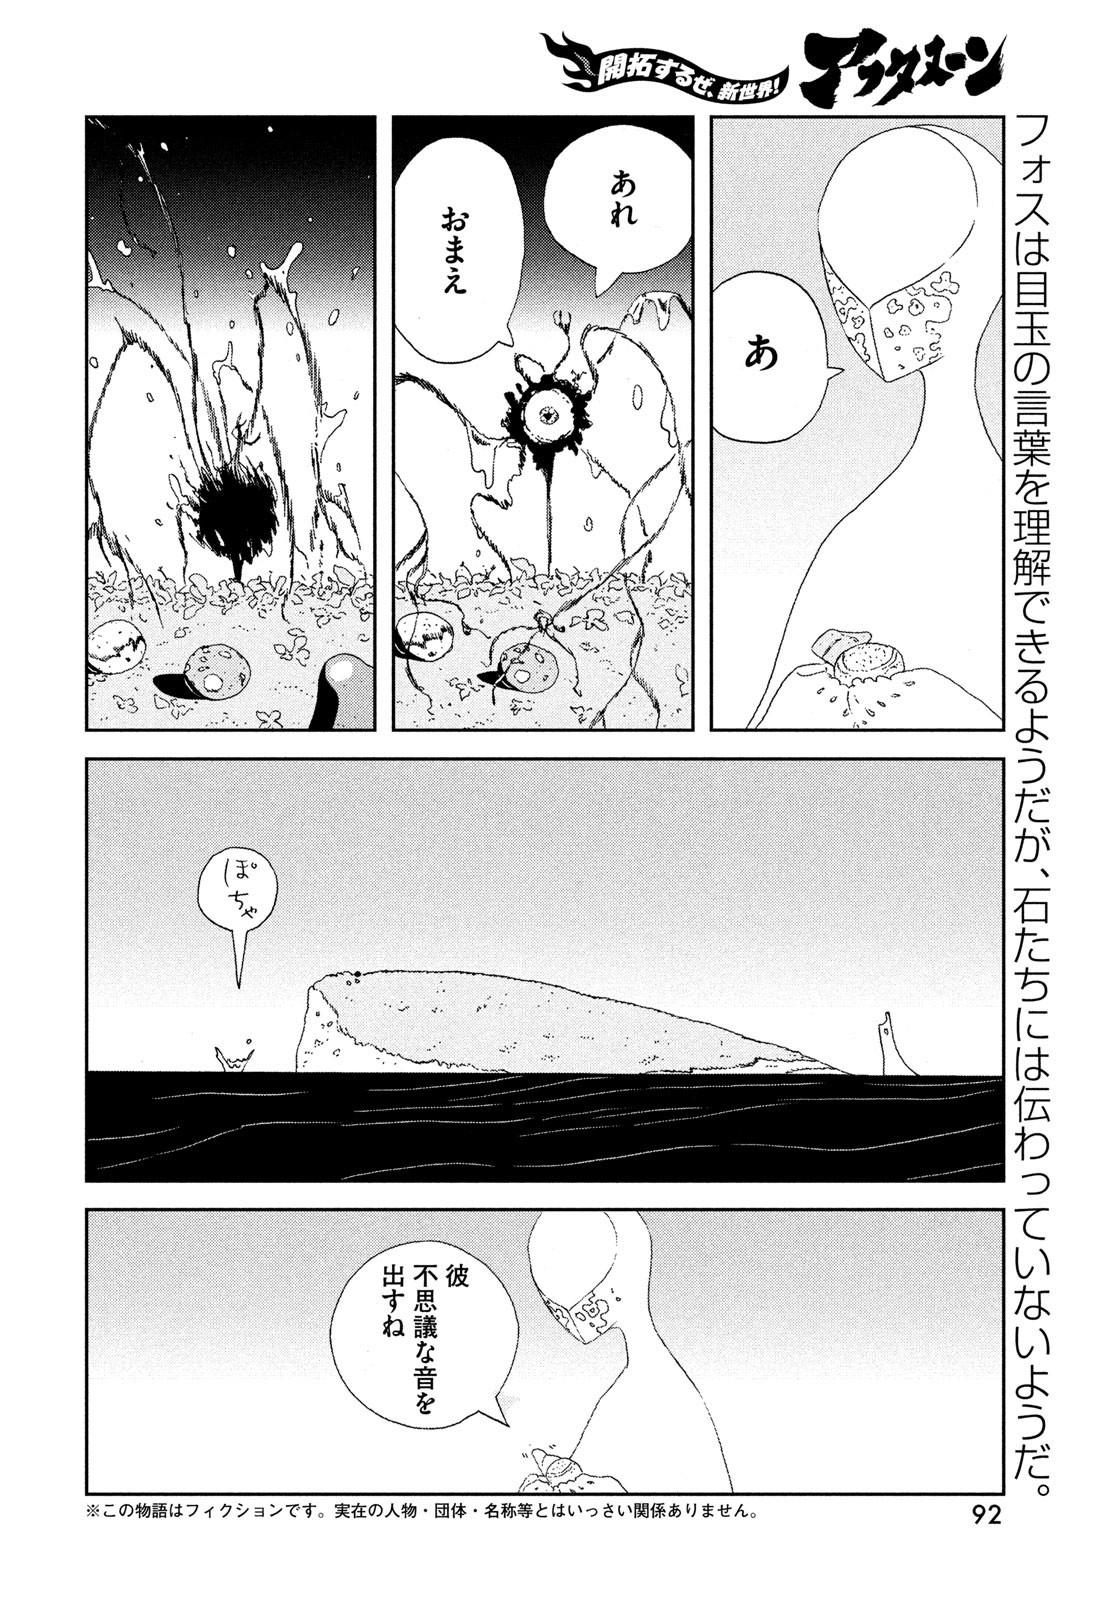 Houseki no Kuni - Chapter 102 - Page 2